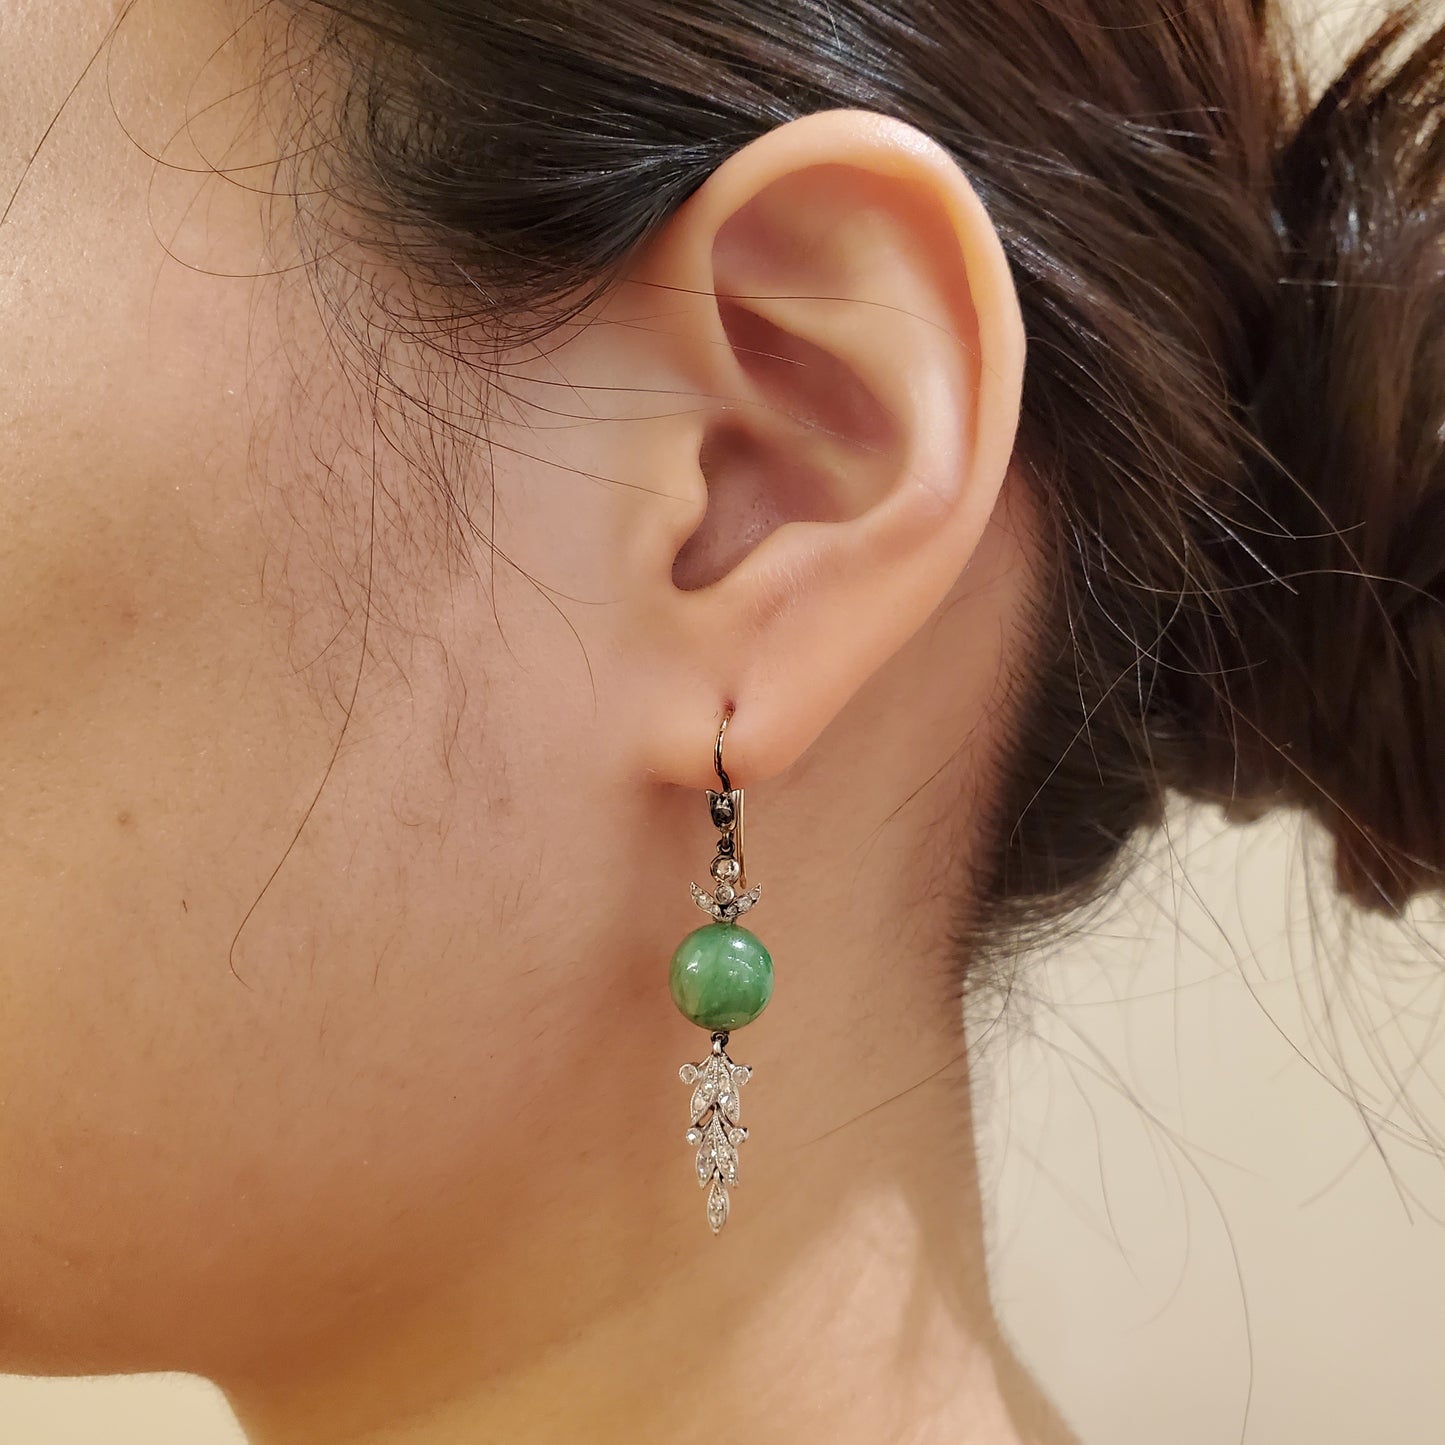 Antique 14KT White Gold Jade & Diamond Earrings worn on ear